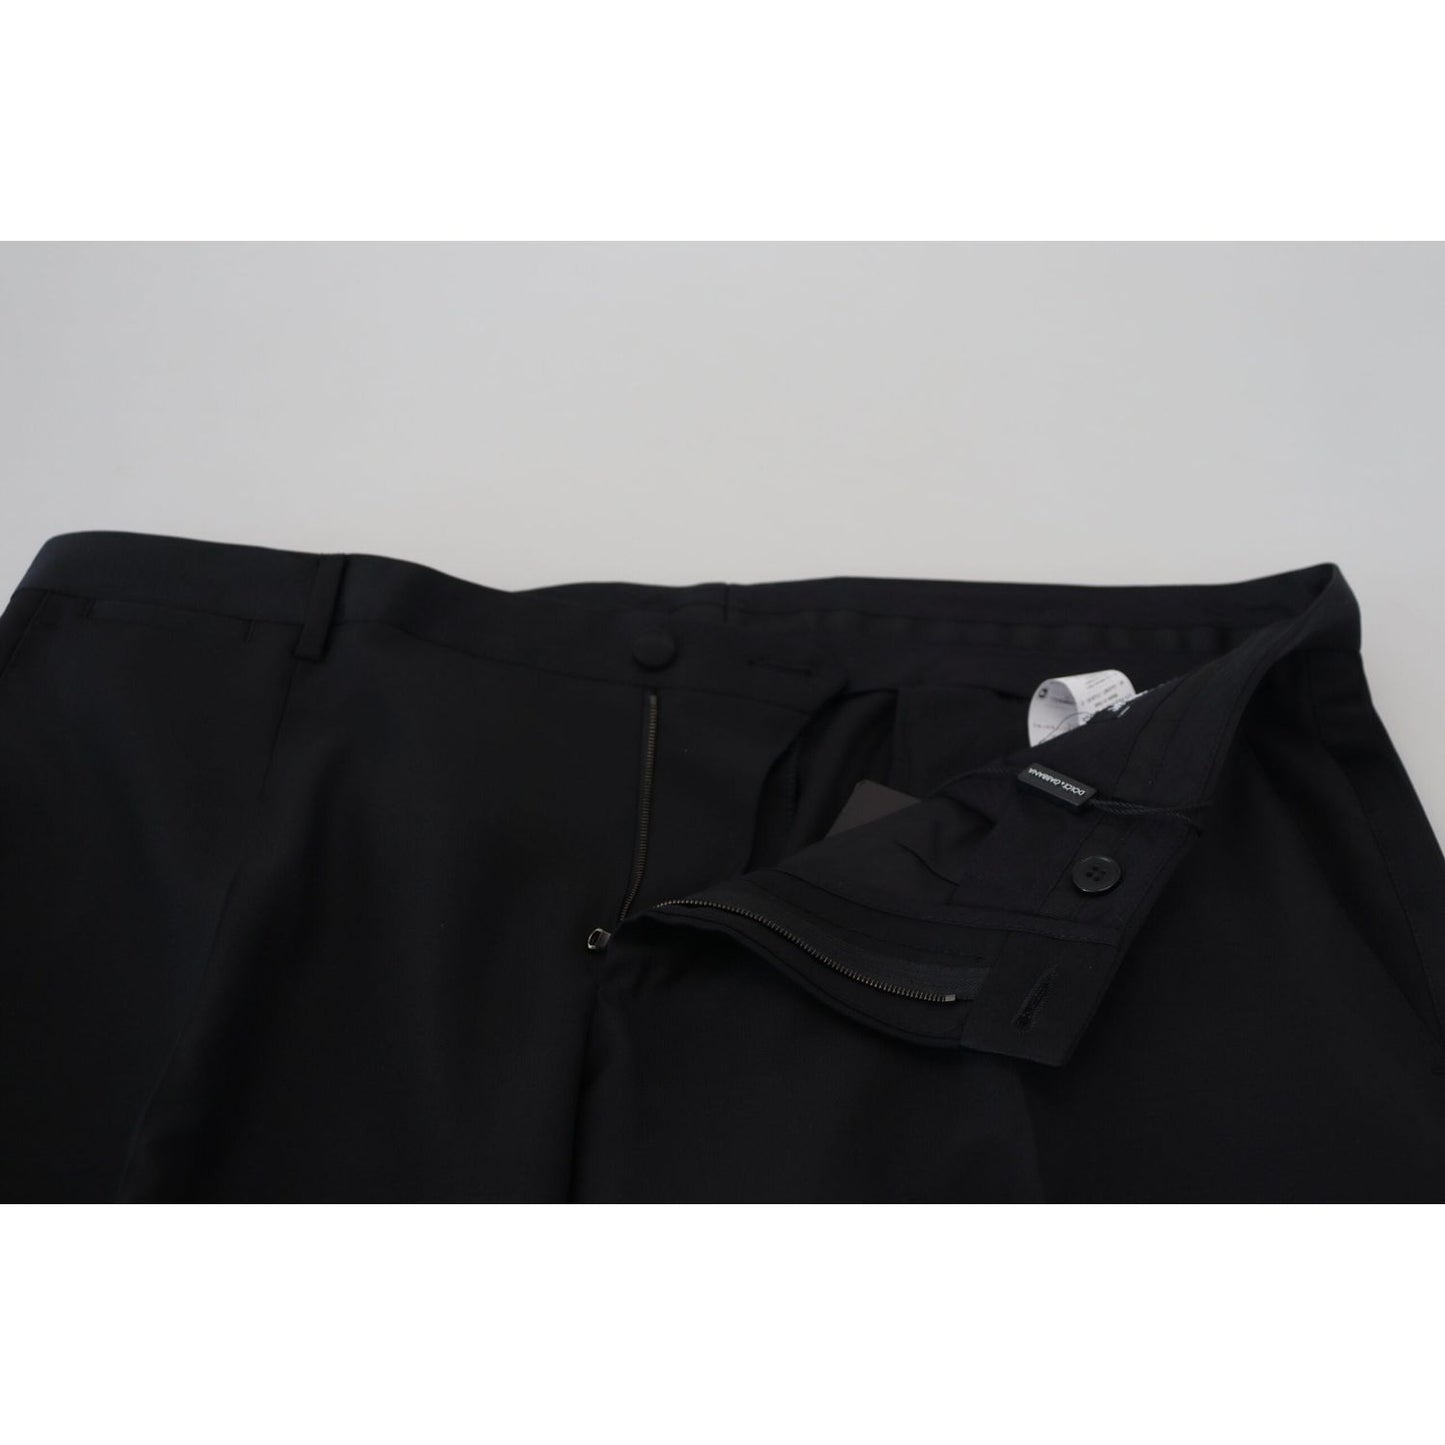 Dolce & Gabbana Elegant Slim Fit Black Dress Trousers black-dress-wool-silk-trouser-pants